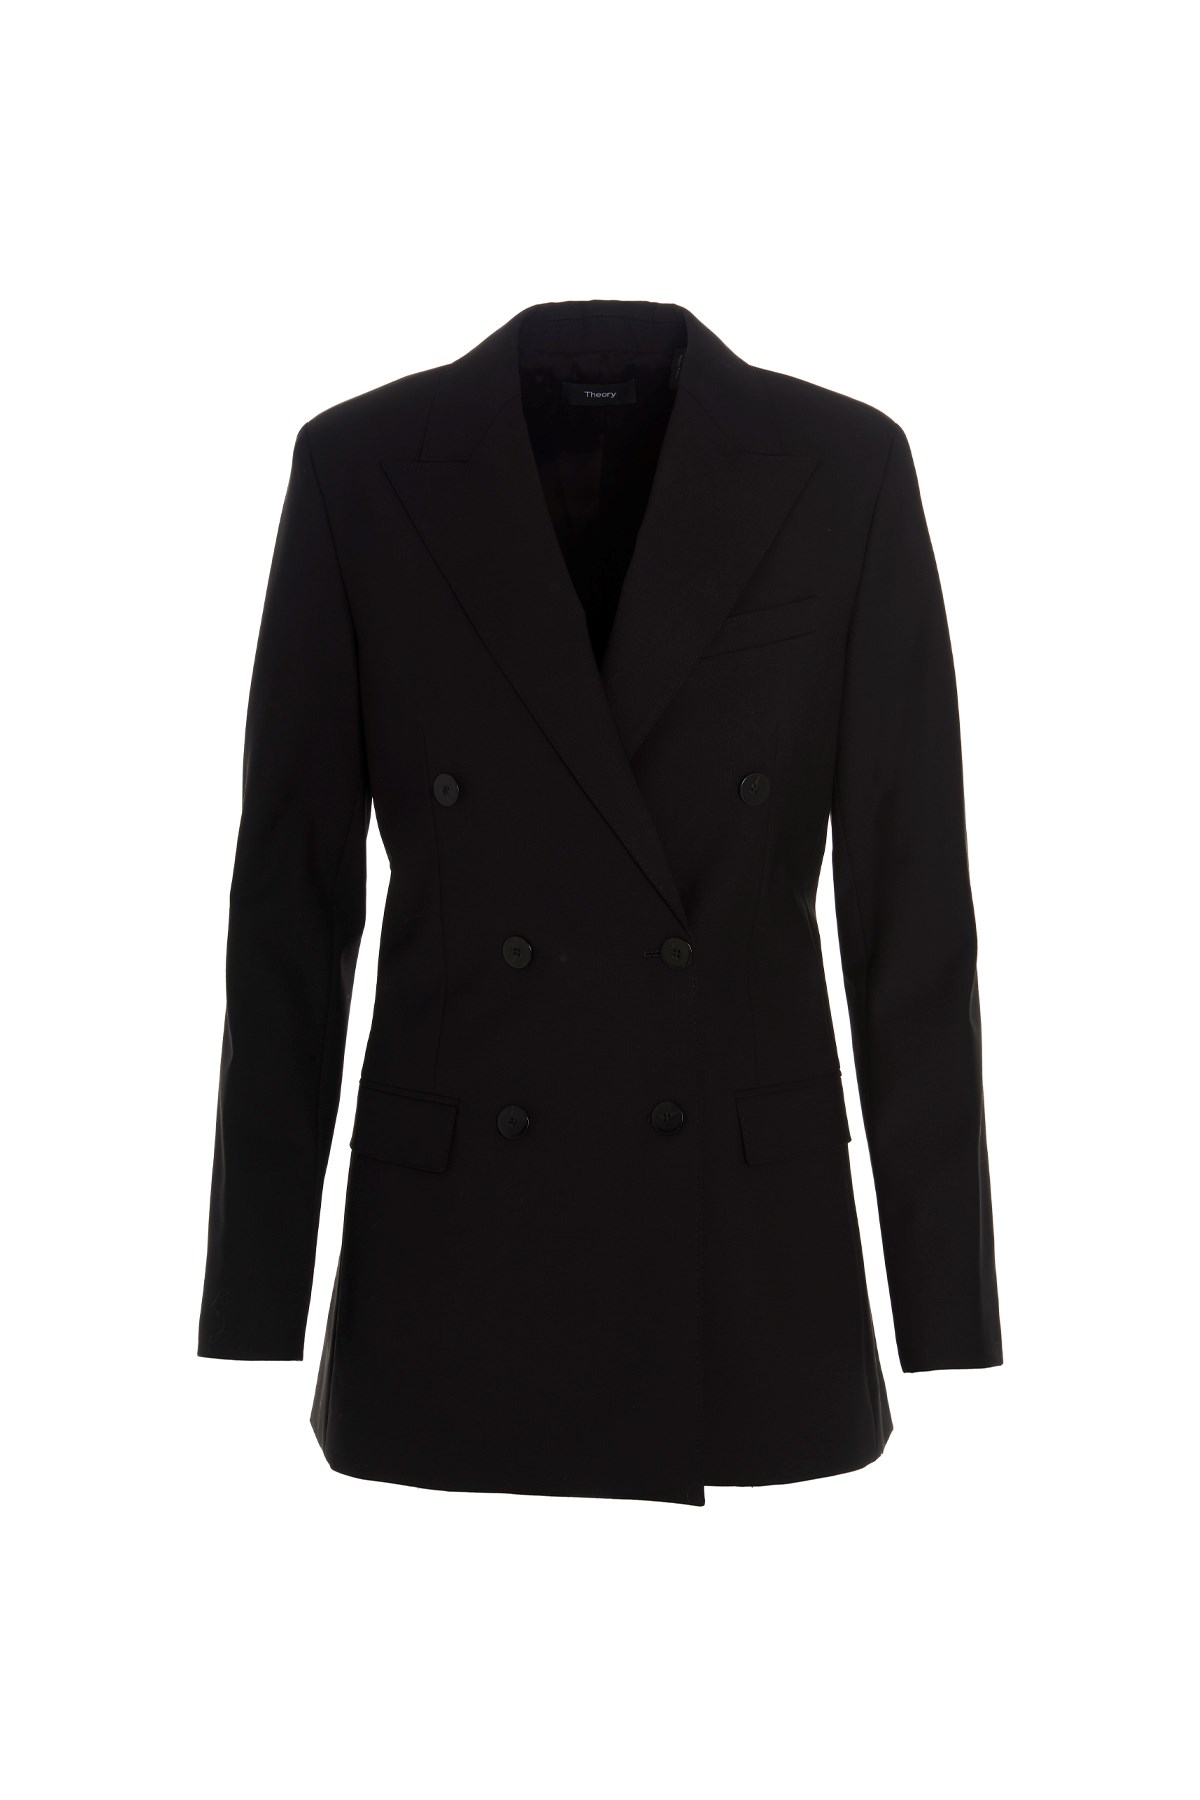 THEORY 'Db Tailor’ Blazer Jacket